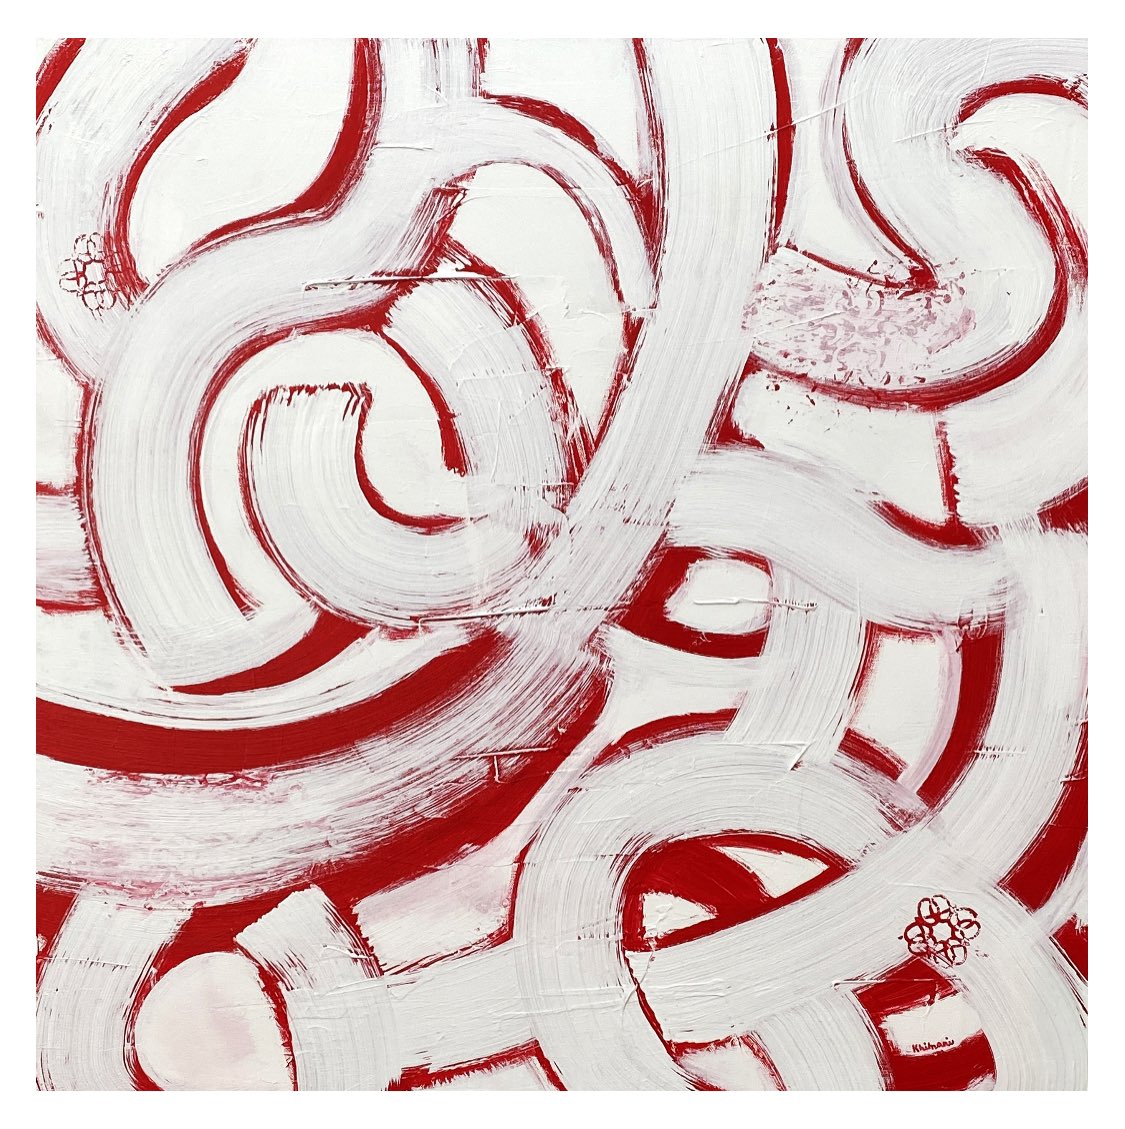 “RED MAP” 30x30 Acrylic on Canvas. Available!
.
.
.
.
#california #fineart #abstractart #artanddesign #onlineartgallery #artdealers #artlovers #artbuyers #modernart #interiordecor #interiordecorating #homedecor  #contemporarypainting #canvasart #acrylicart #canvas #weho #map